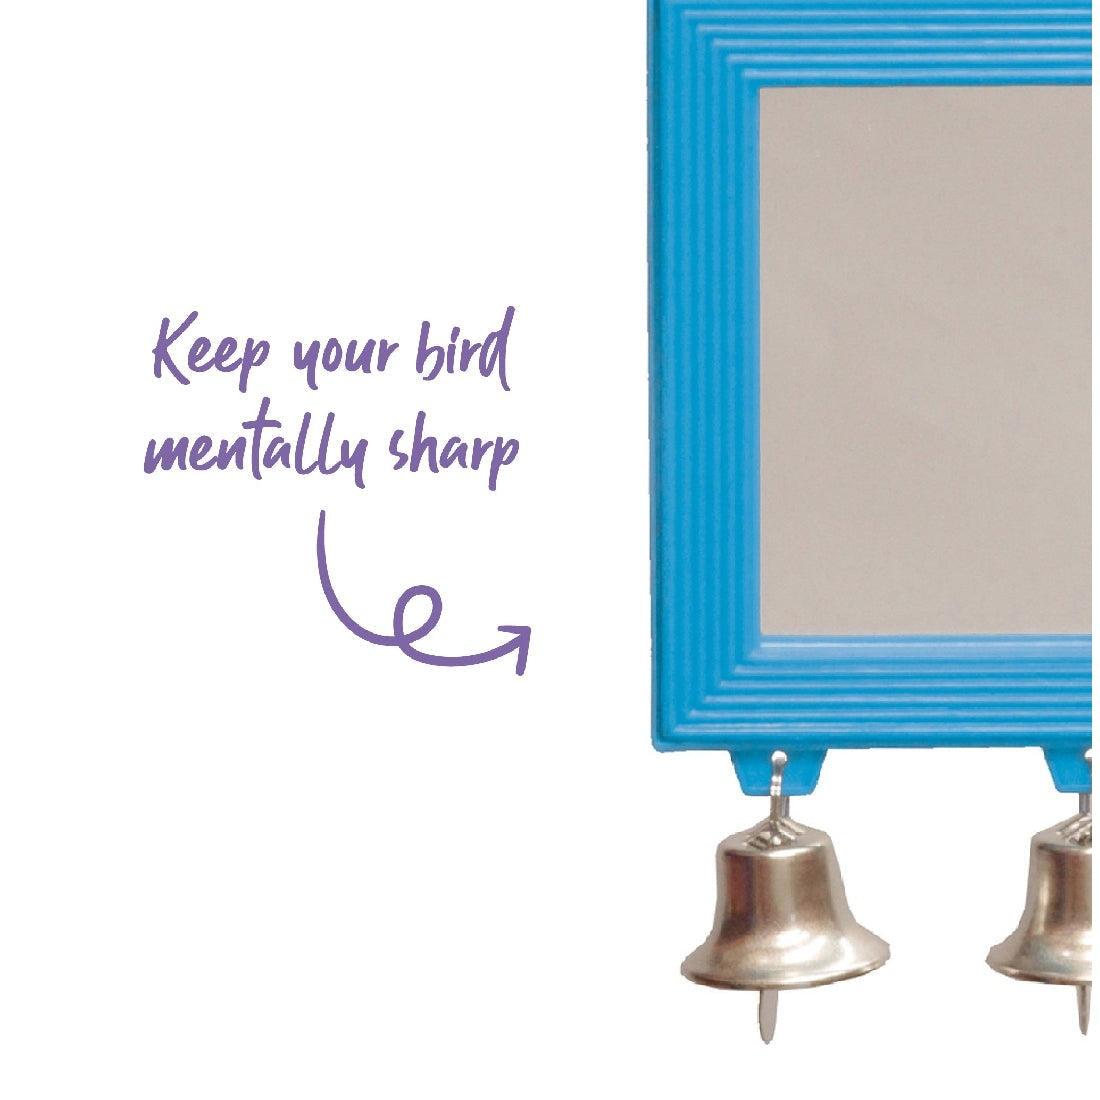 Alt: Bird toy mirror with bells; text "Keep your bird mentally sharp."